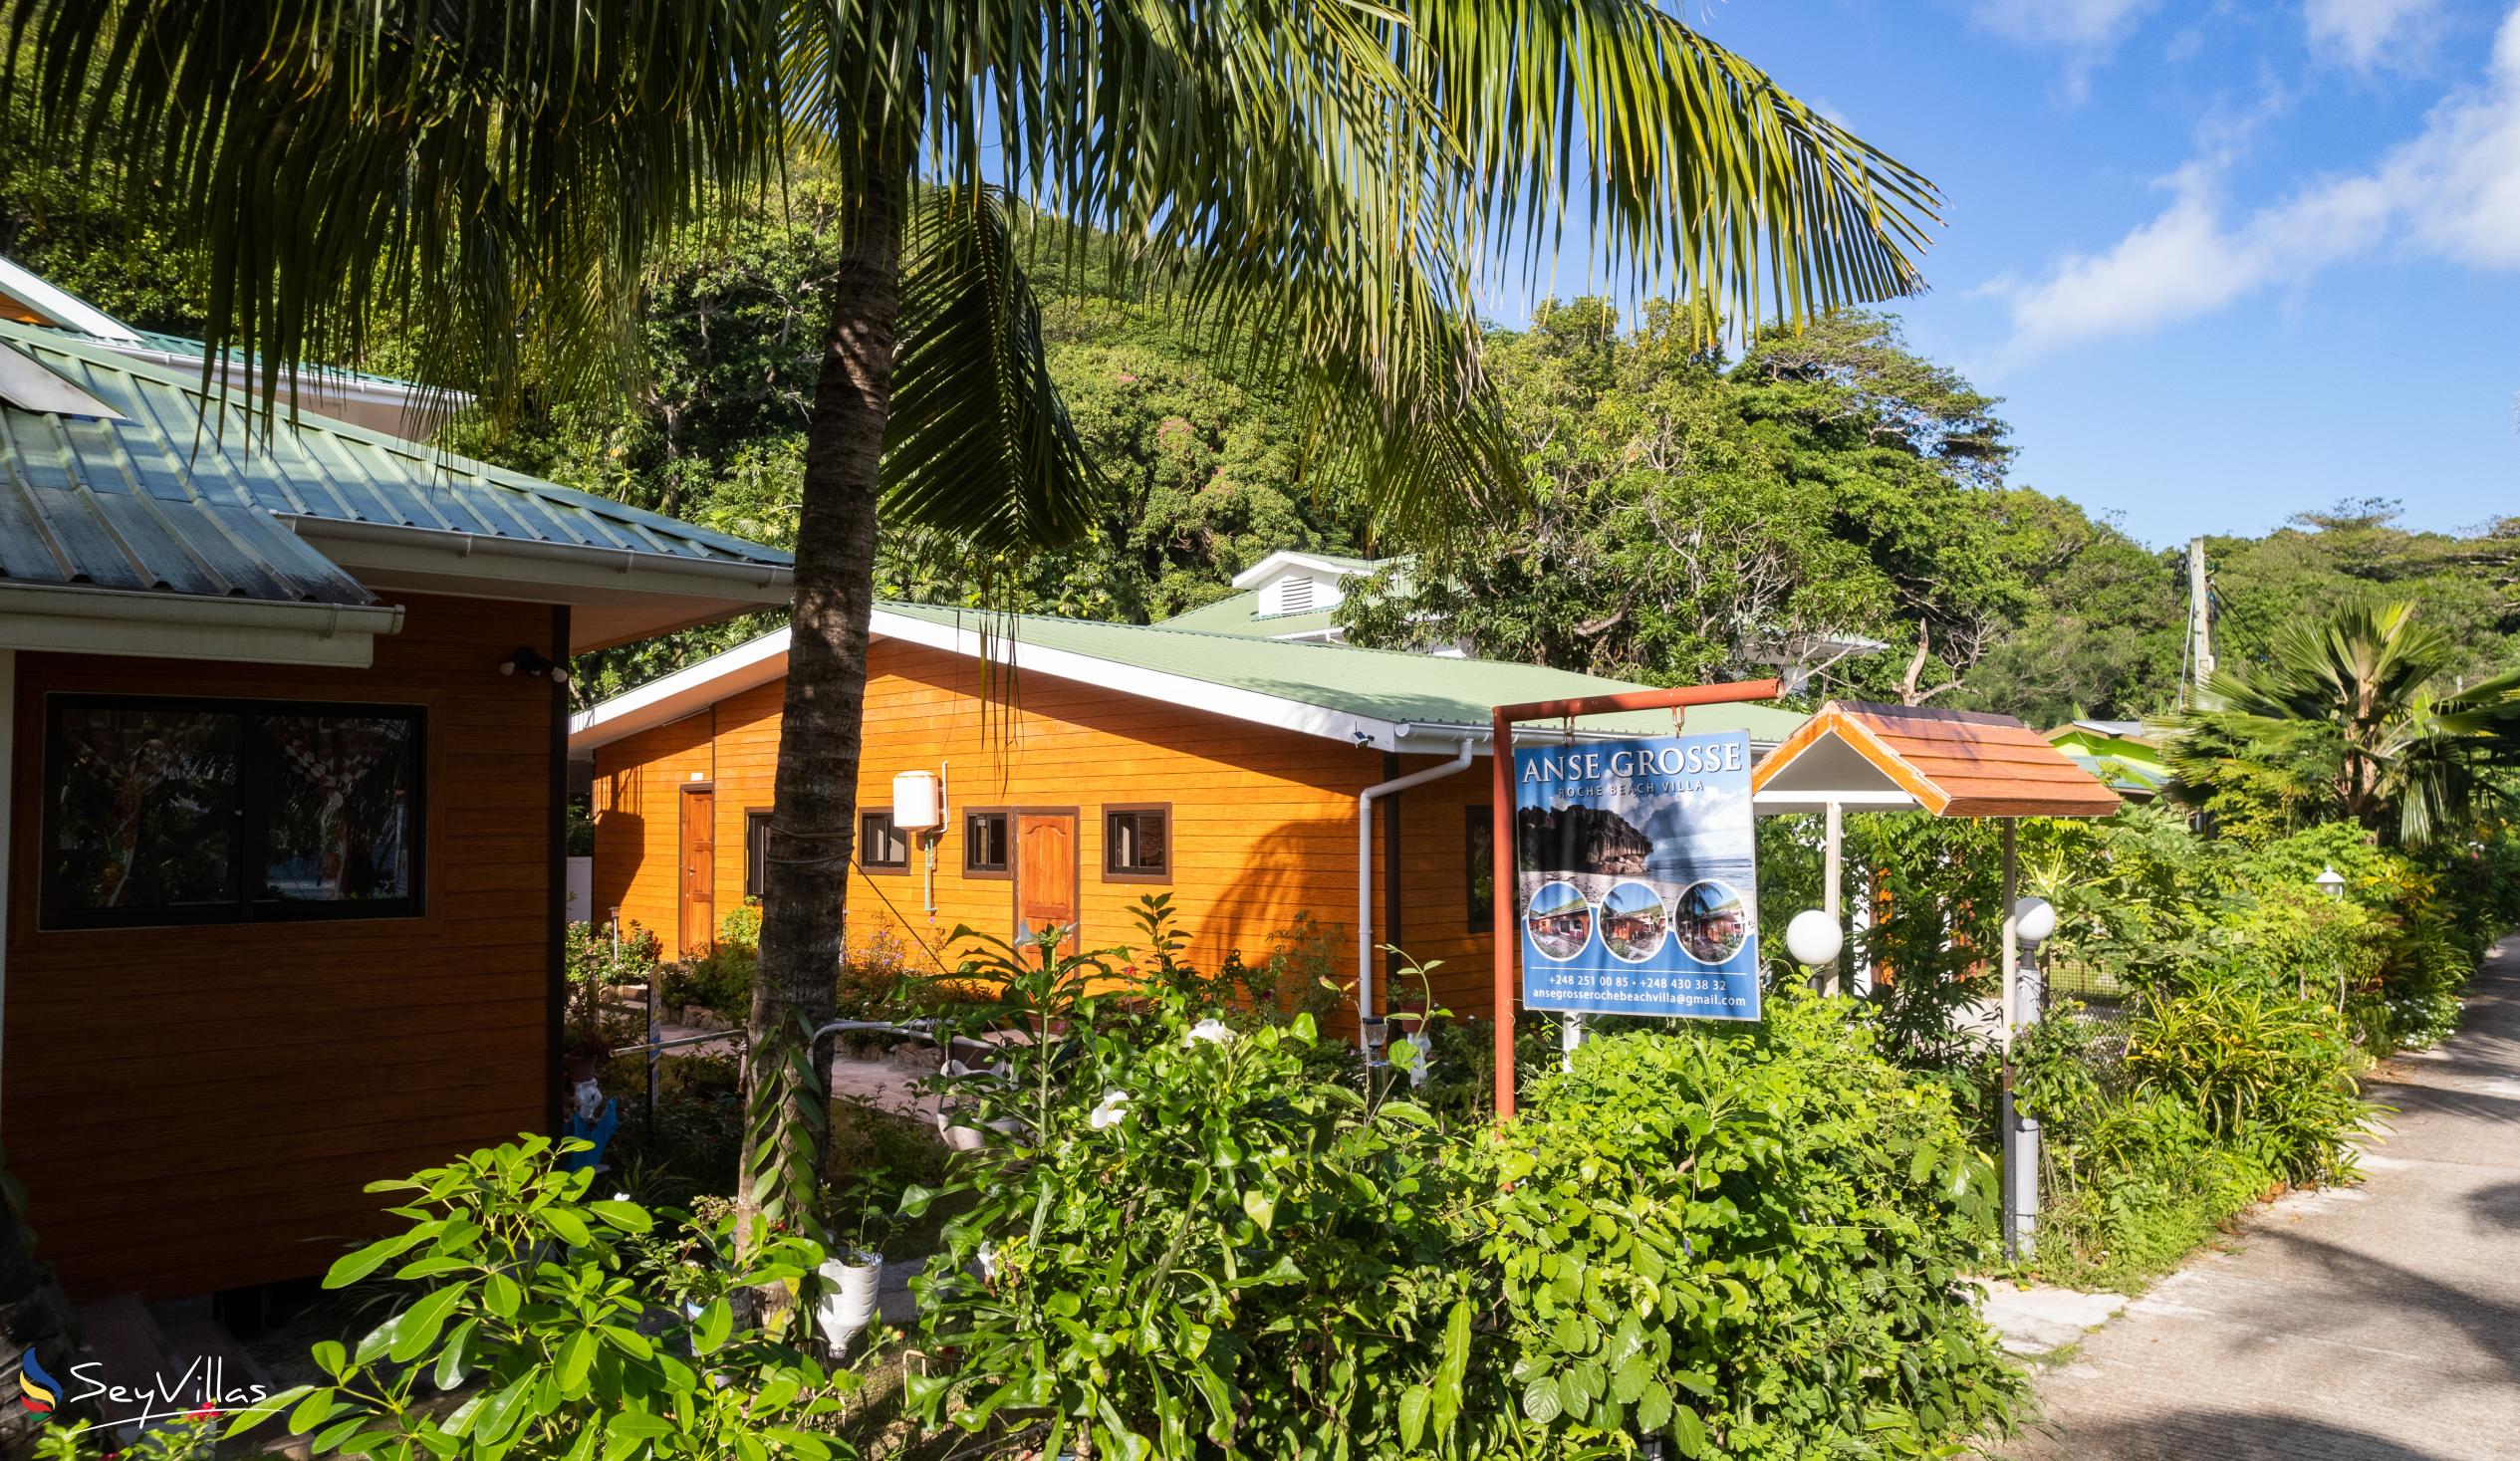 Foto 13: Anse Grosse Roche Beach Villa - Aussenbereich - La Digue (Seychellen)